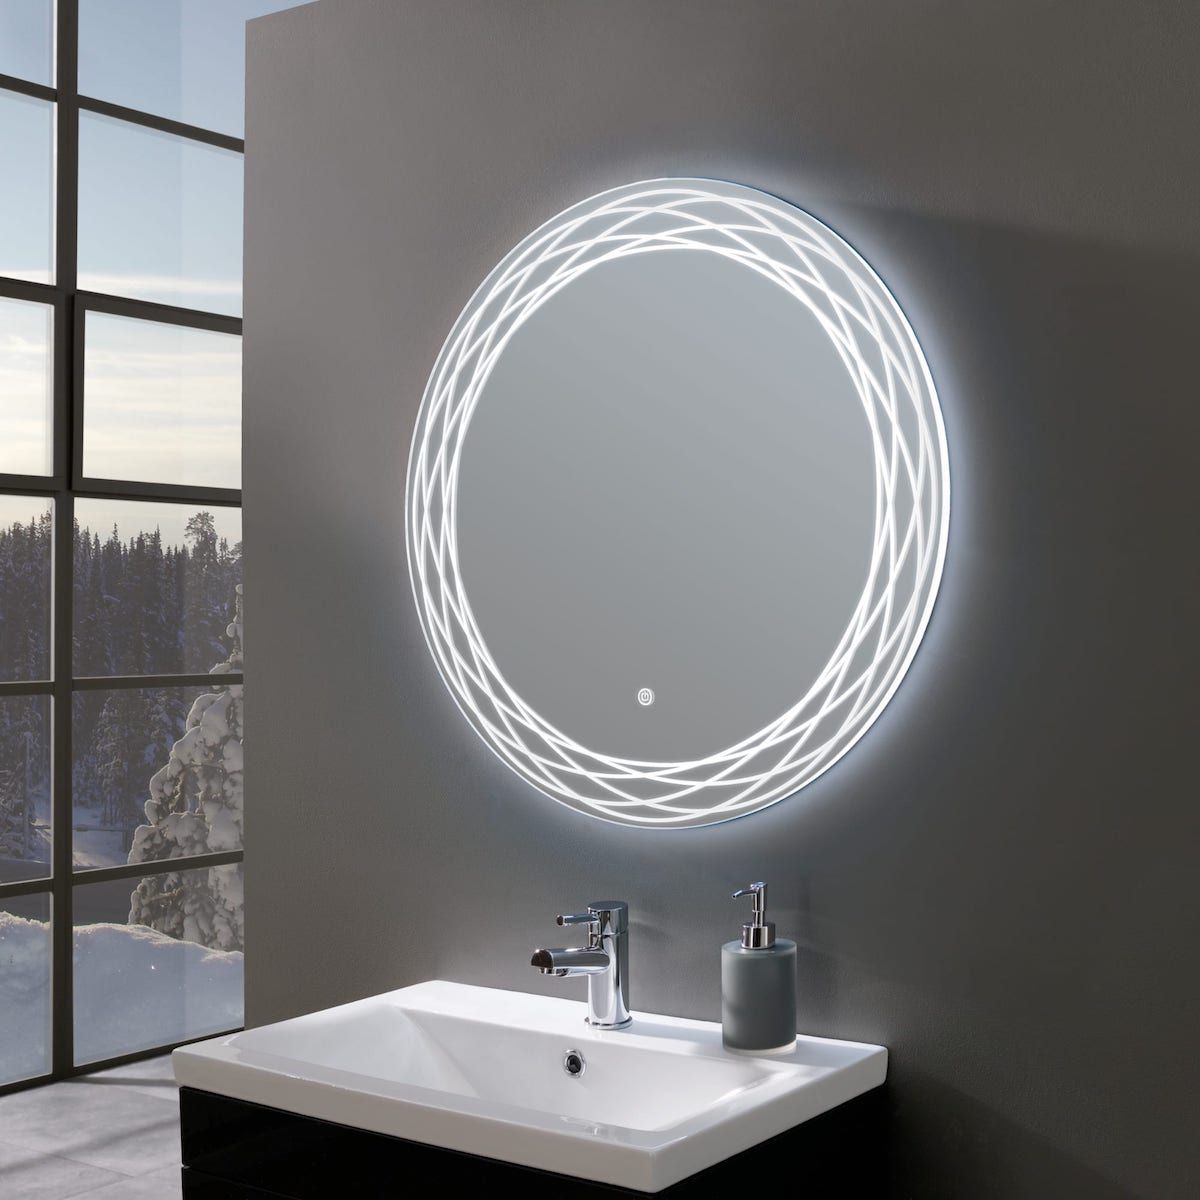 Illuminated LED Bathroom Mirror GS084N Wall-Mounted Light warm white, 400 x 600 mm 